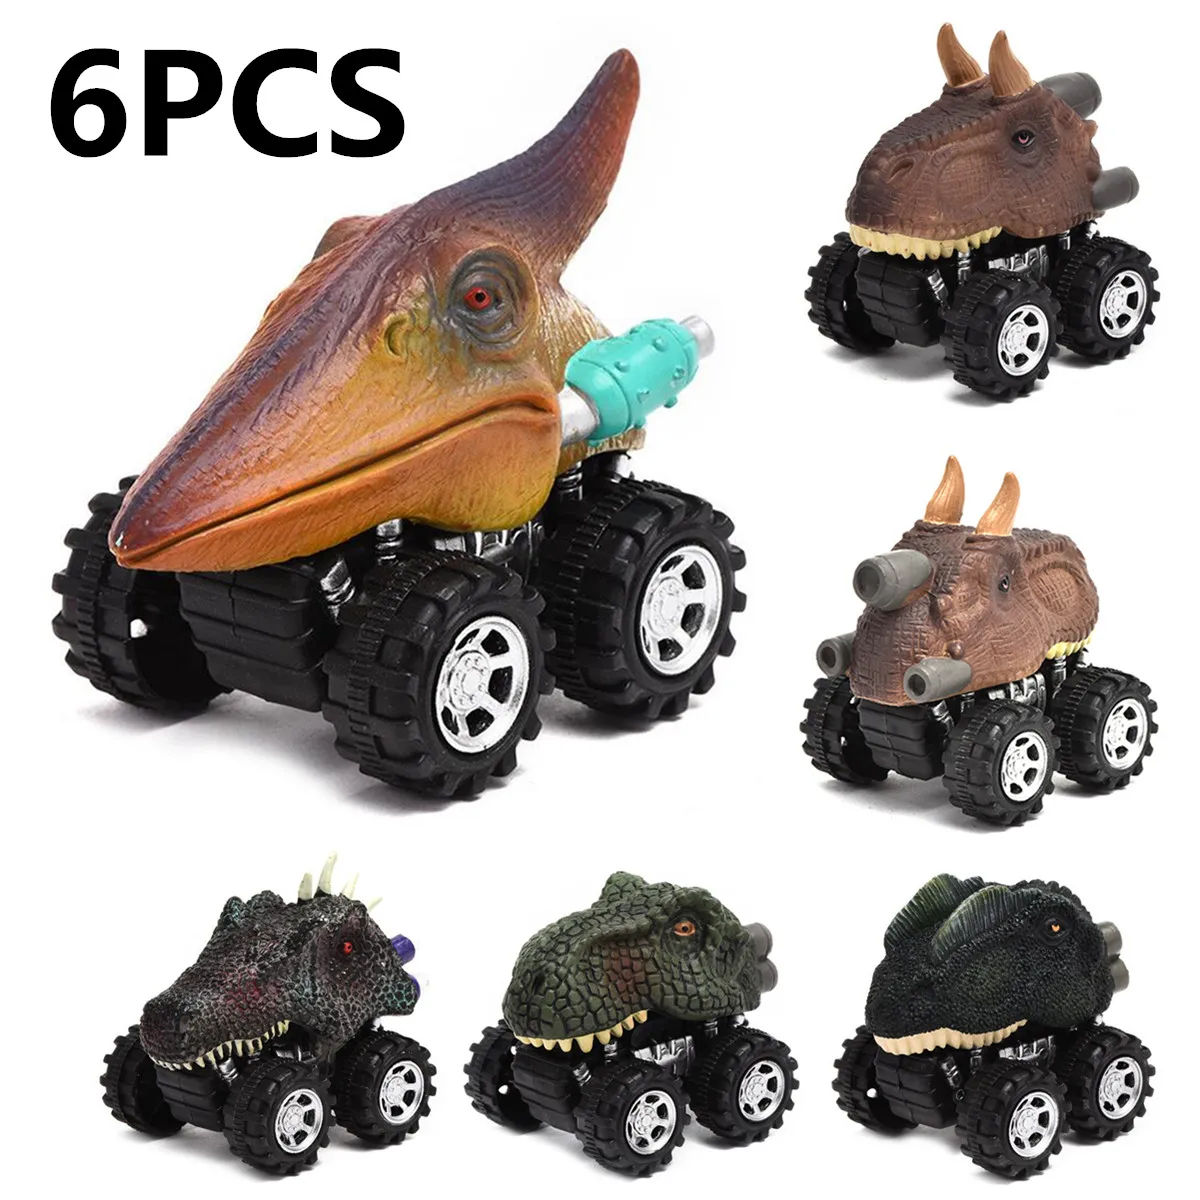 2019 динозавр автомобиль игрушки 6 шт. мини-игрушка автомобиль задняя часть автомобиля Модель игрушки динозавр модель подарок грузовик хобби